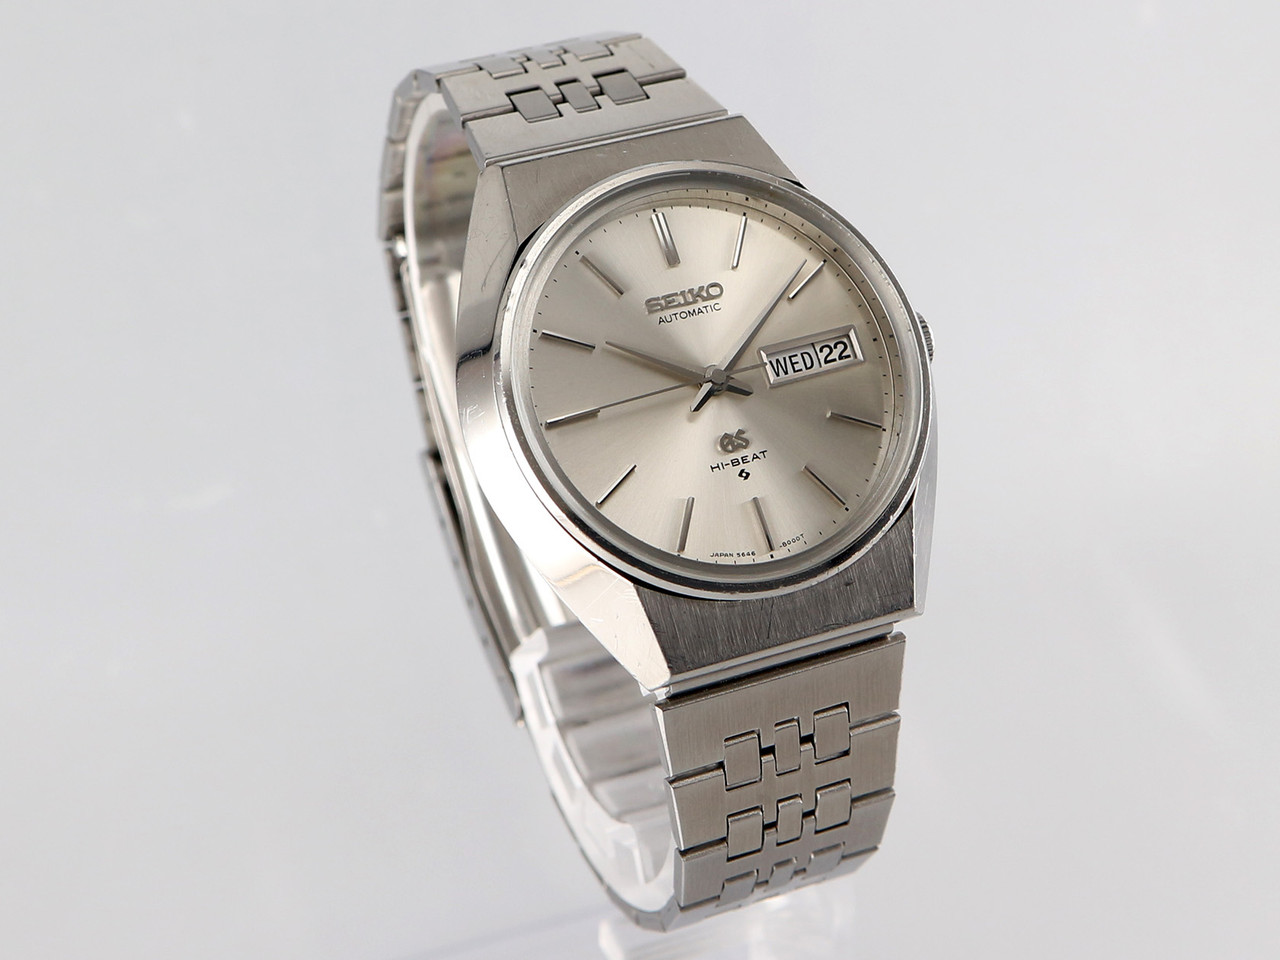 Grand Seiko GS56 Hi-Beat VWS-2048 - Vintage Watch Services